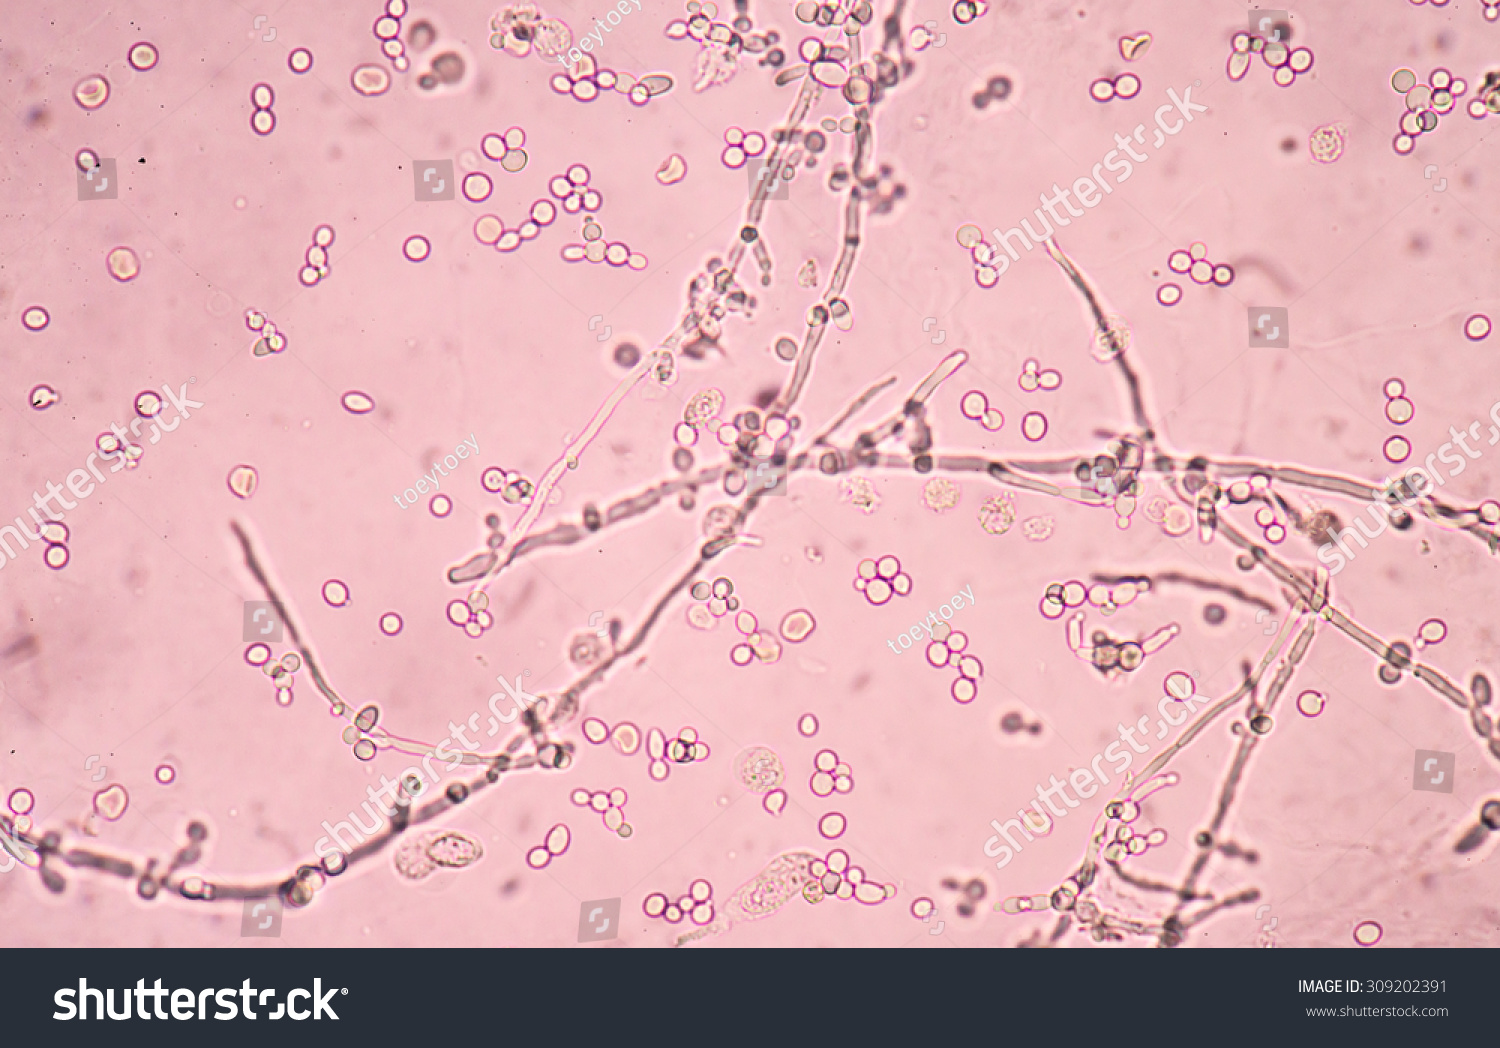 Budding Yeast Cells Pseudohyphae Urine Sample Stock Photo (Edit Now ...